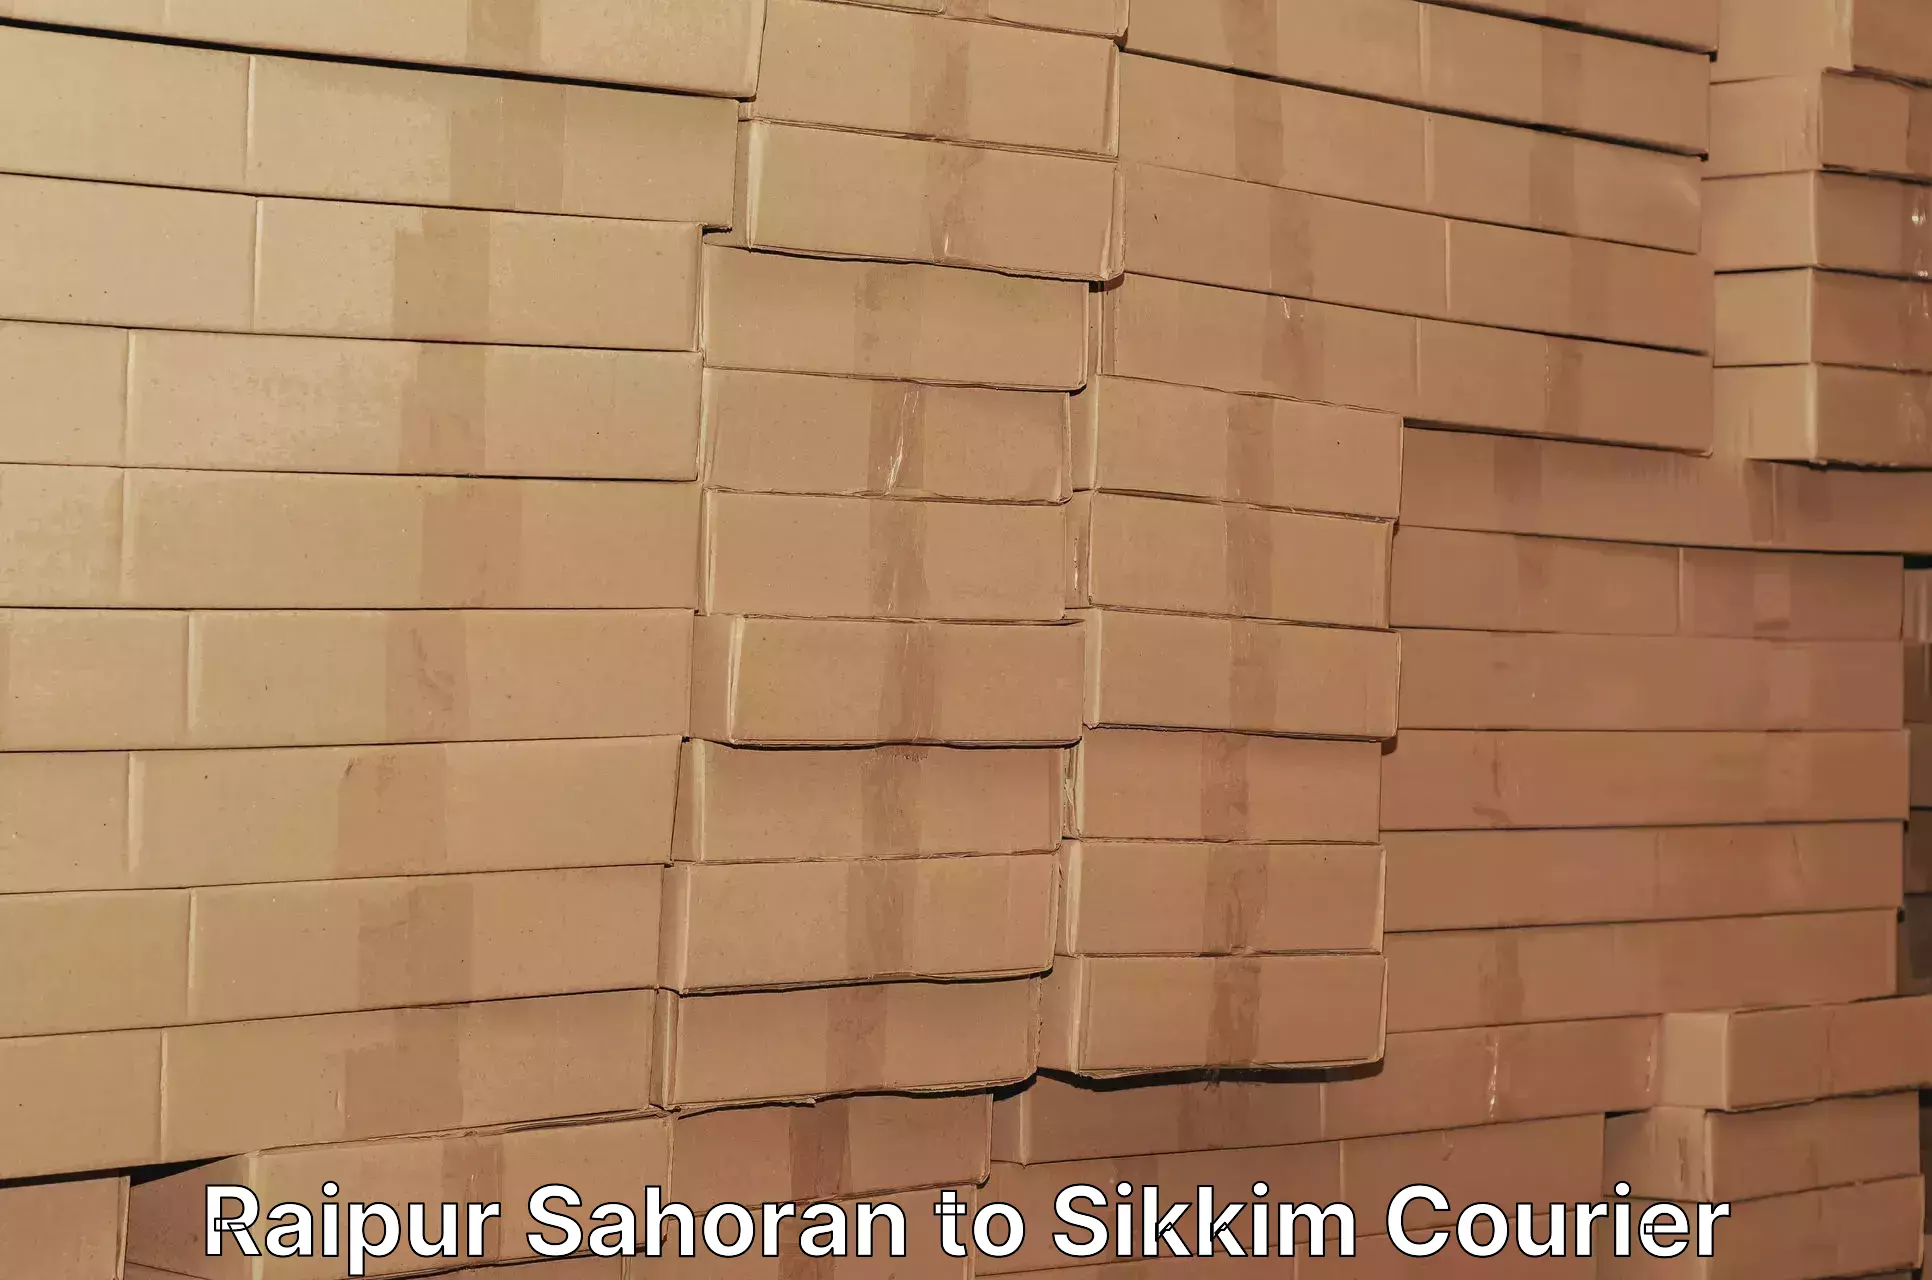 Efficient cargo handling Raipur Sahoran to Sikkim